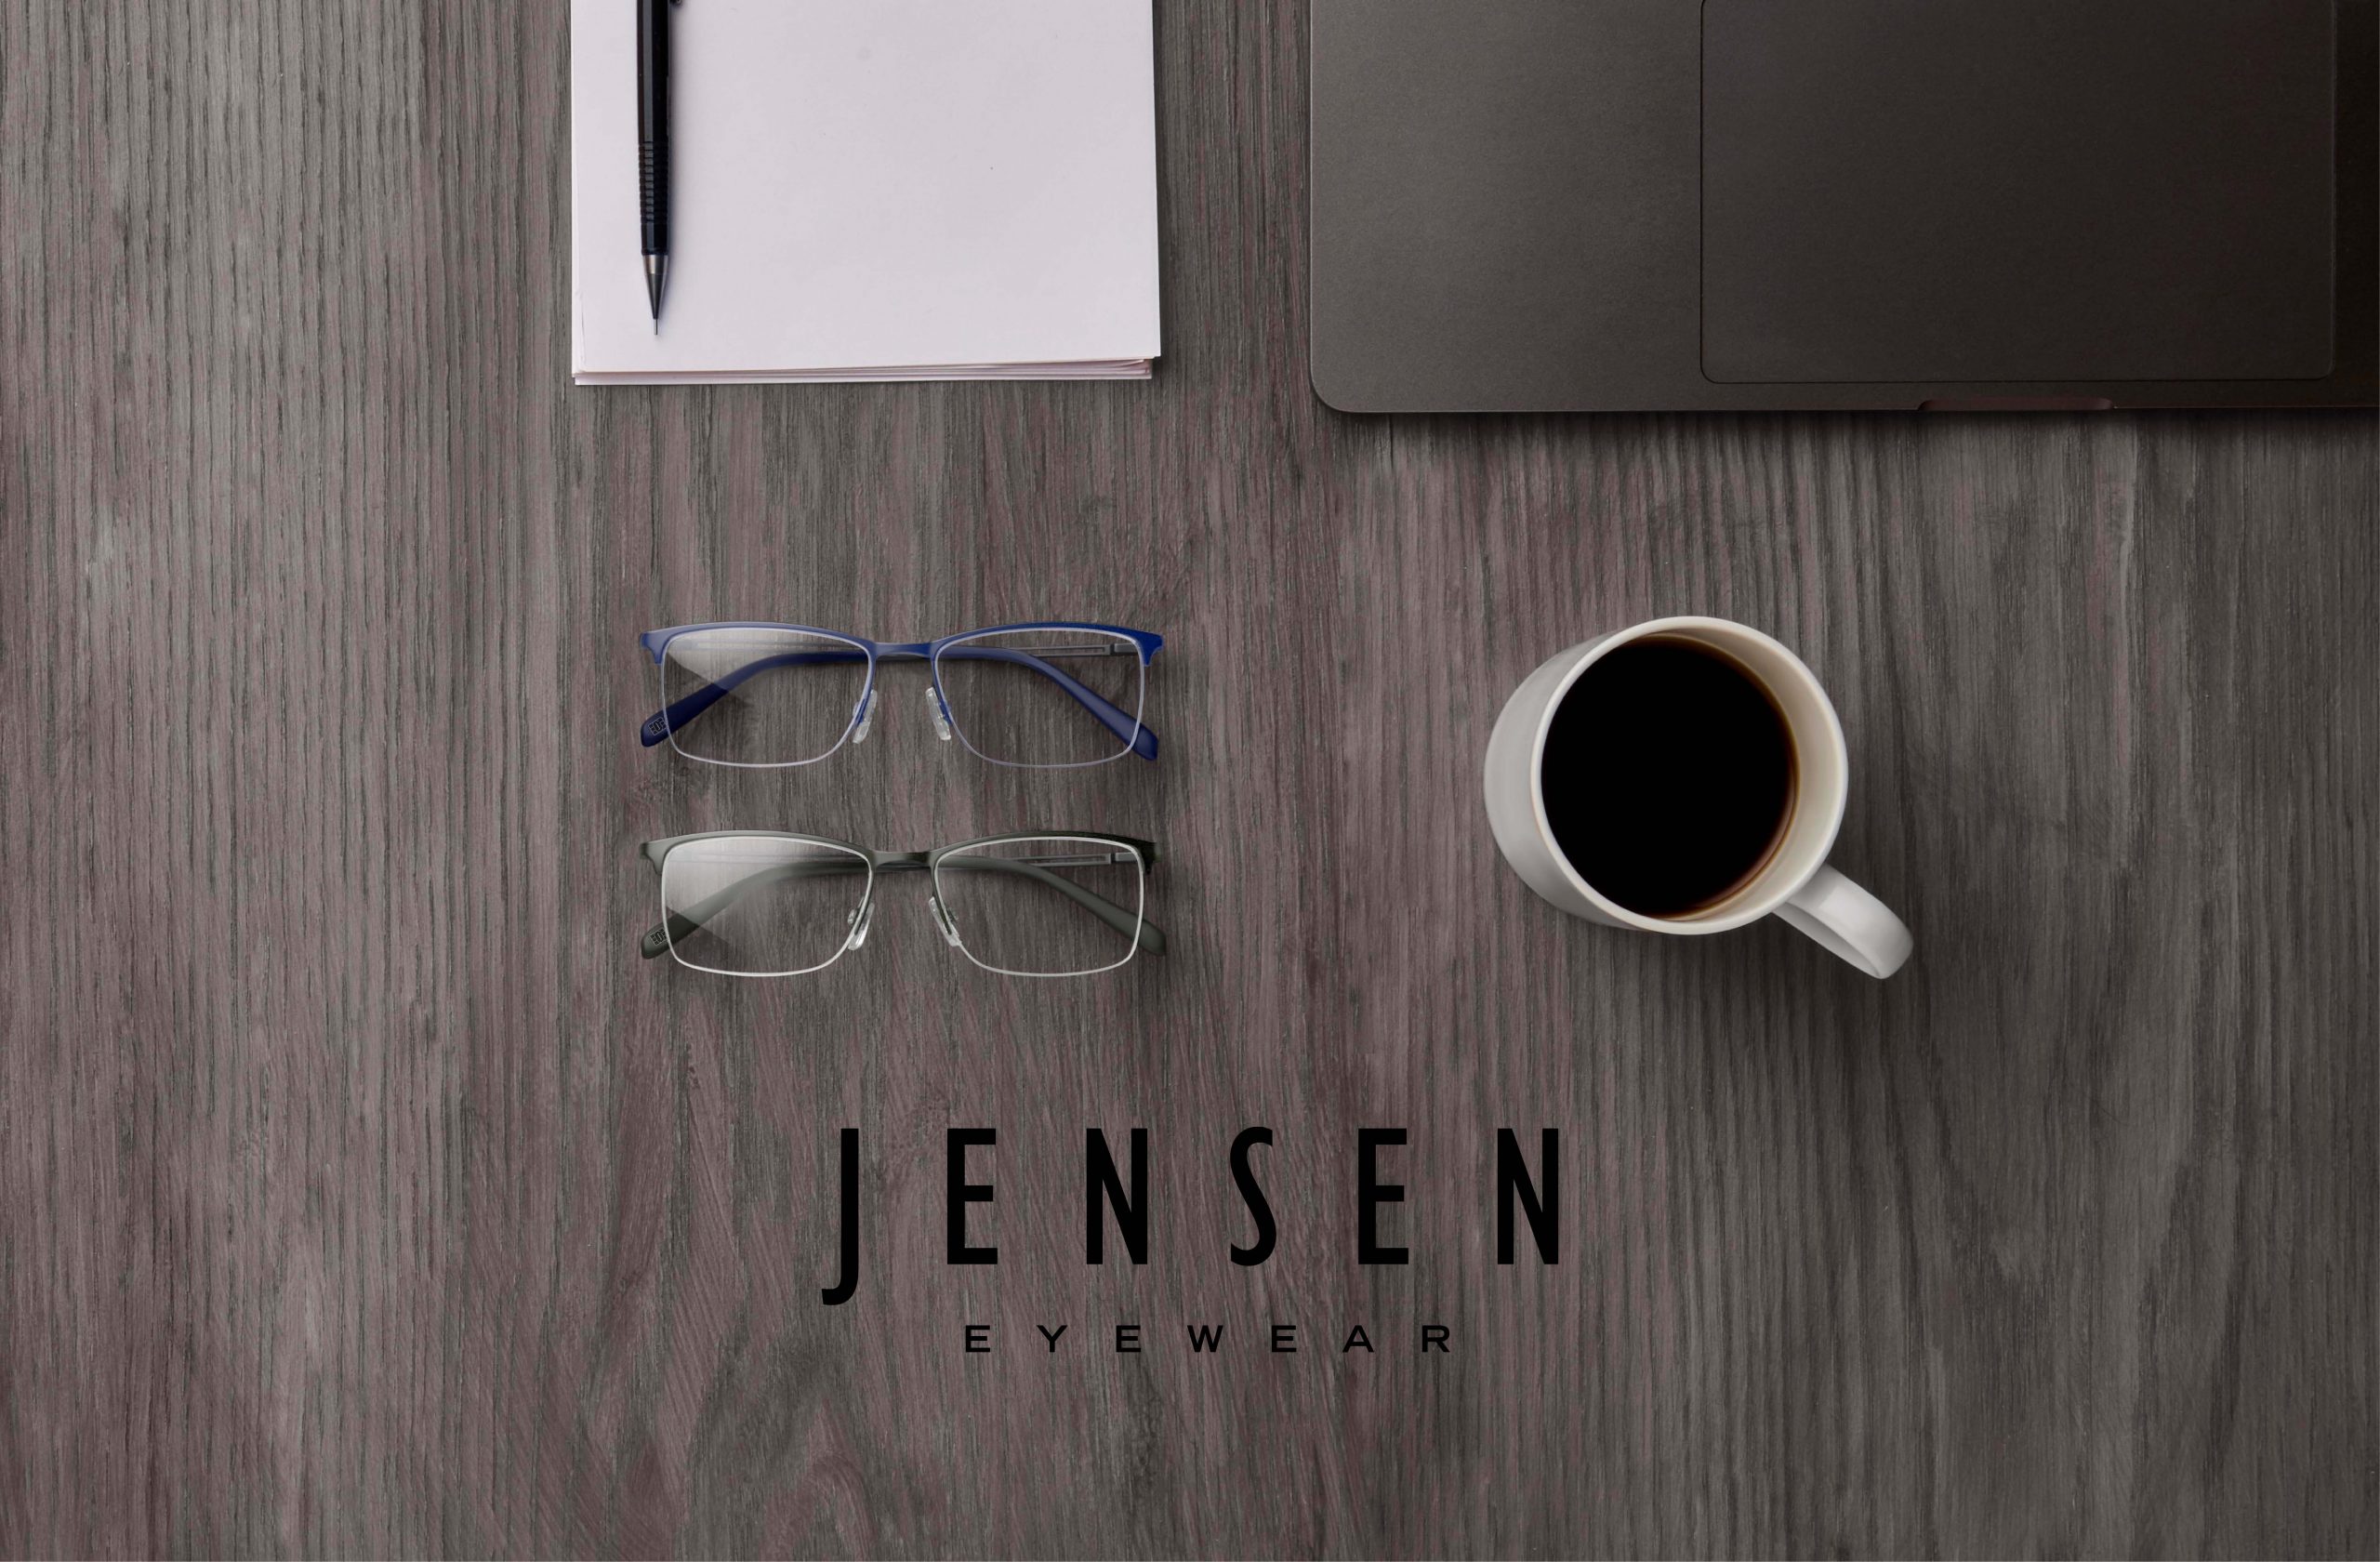 Jensen optical frame JN8869 in khaki and blue